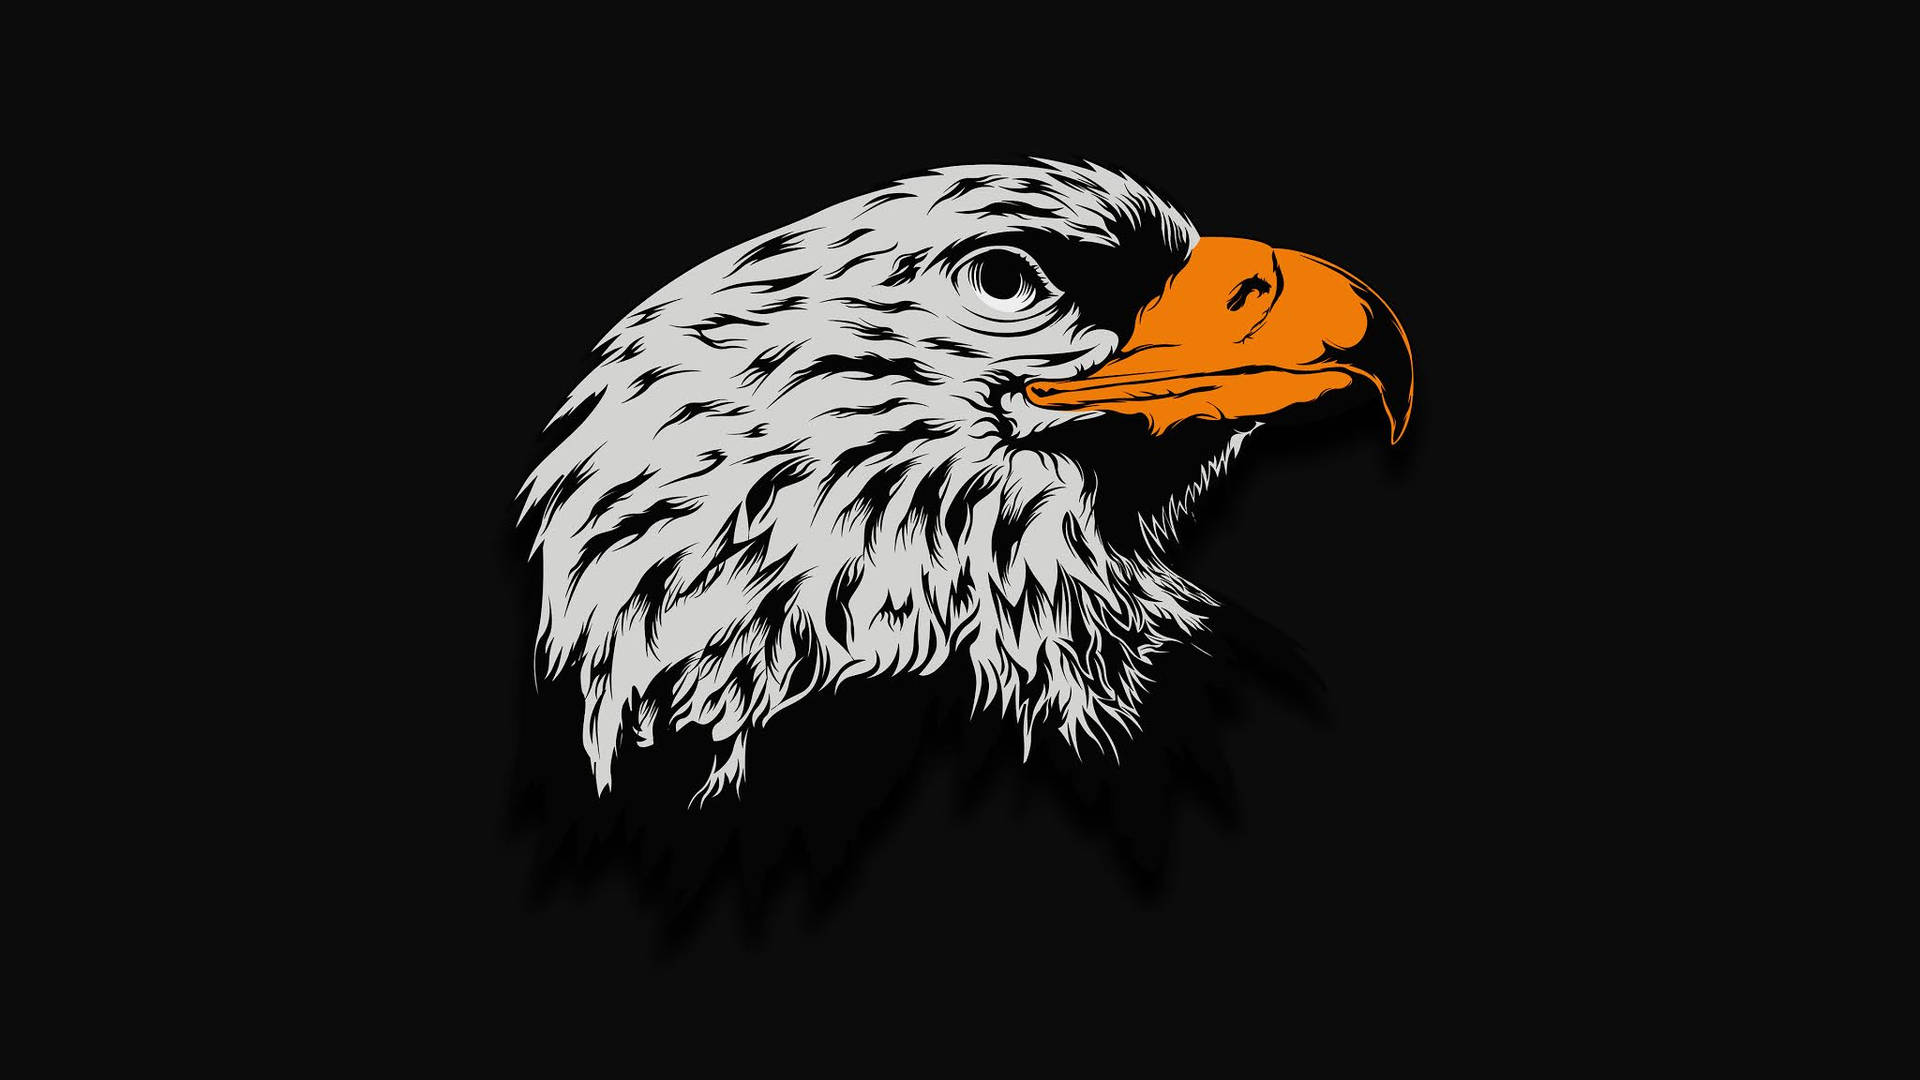 Aguila - Konst Med Fågelhuvud (more Natural Sounding Translation, Meaning 